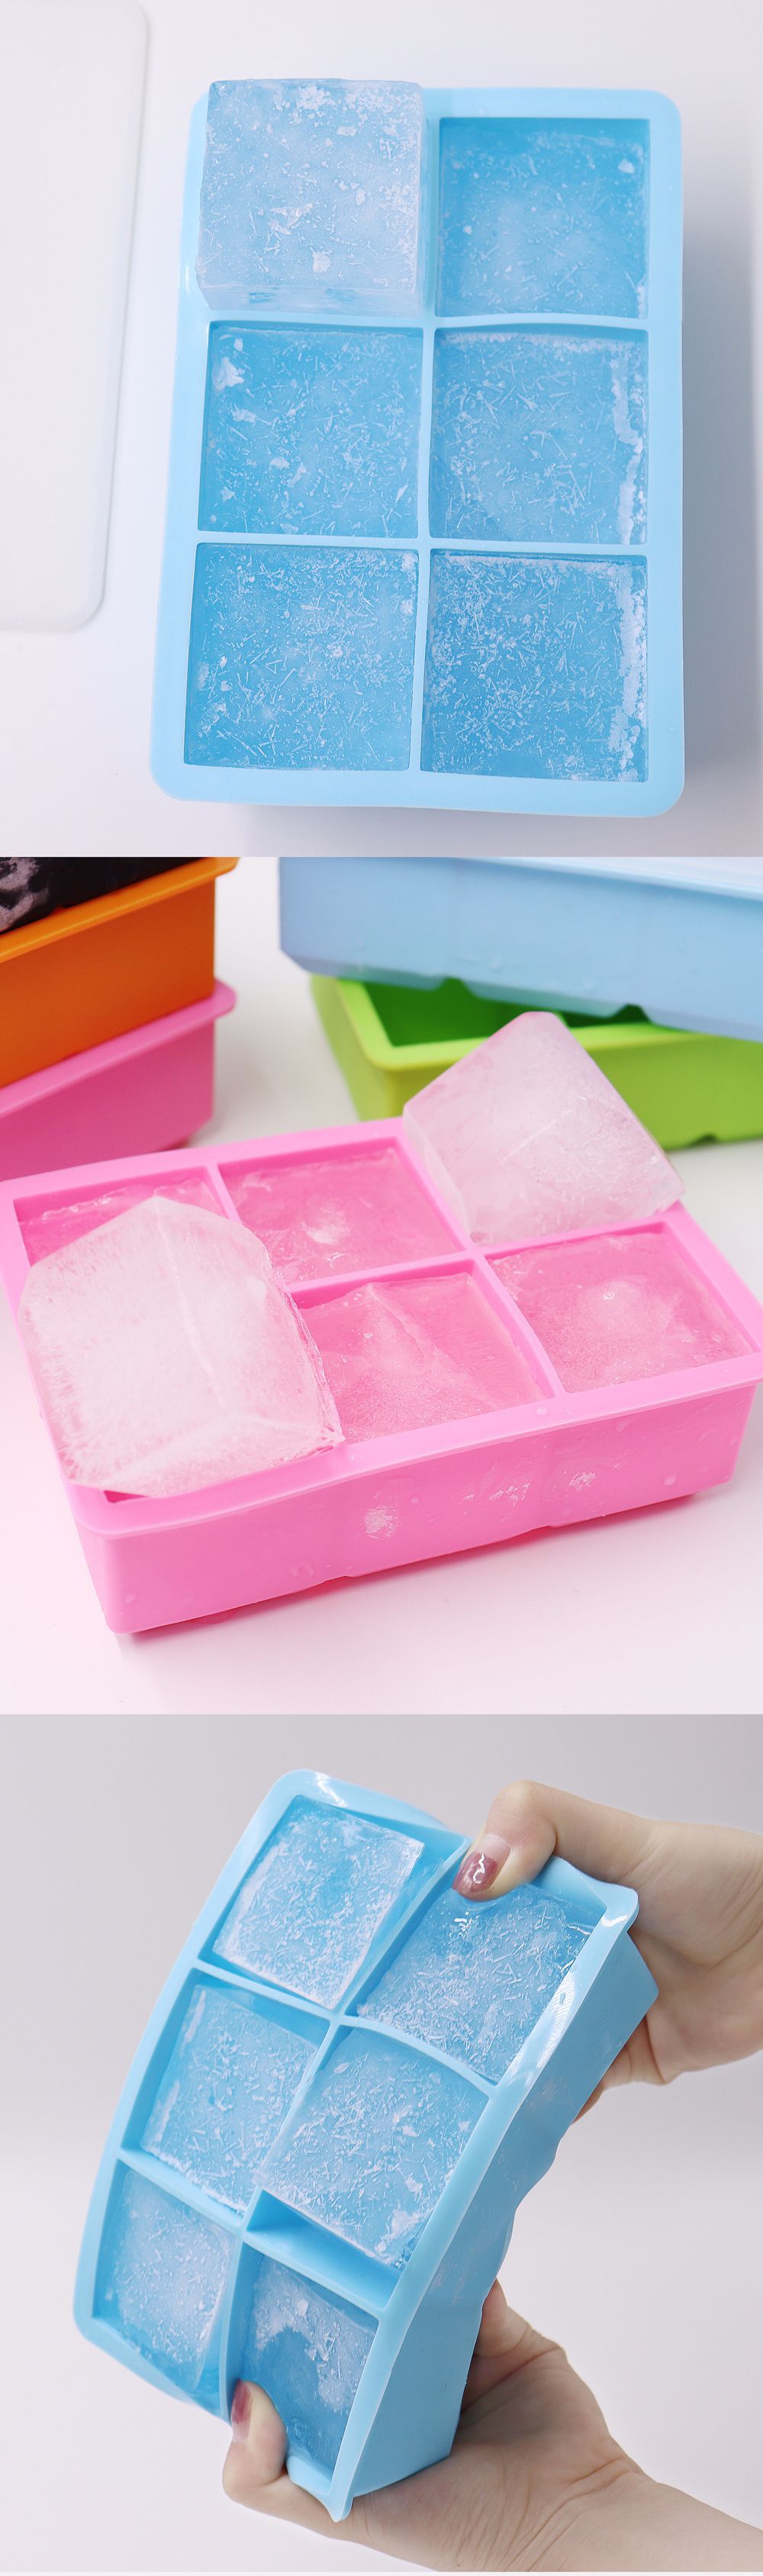 6 Cavity Food Grade Silicone Ice Tray Mold Silicone Ice Maker